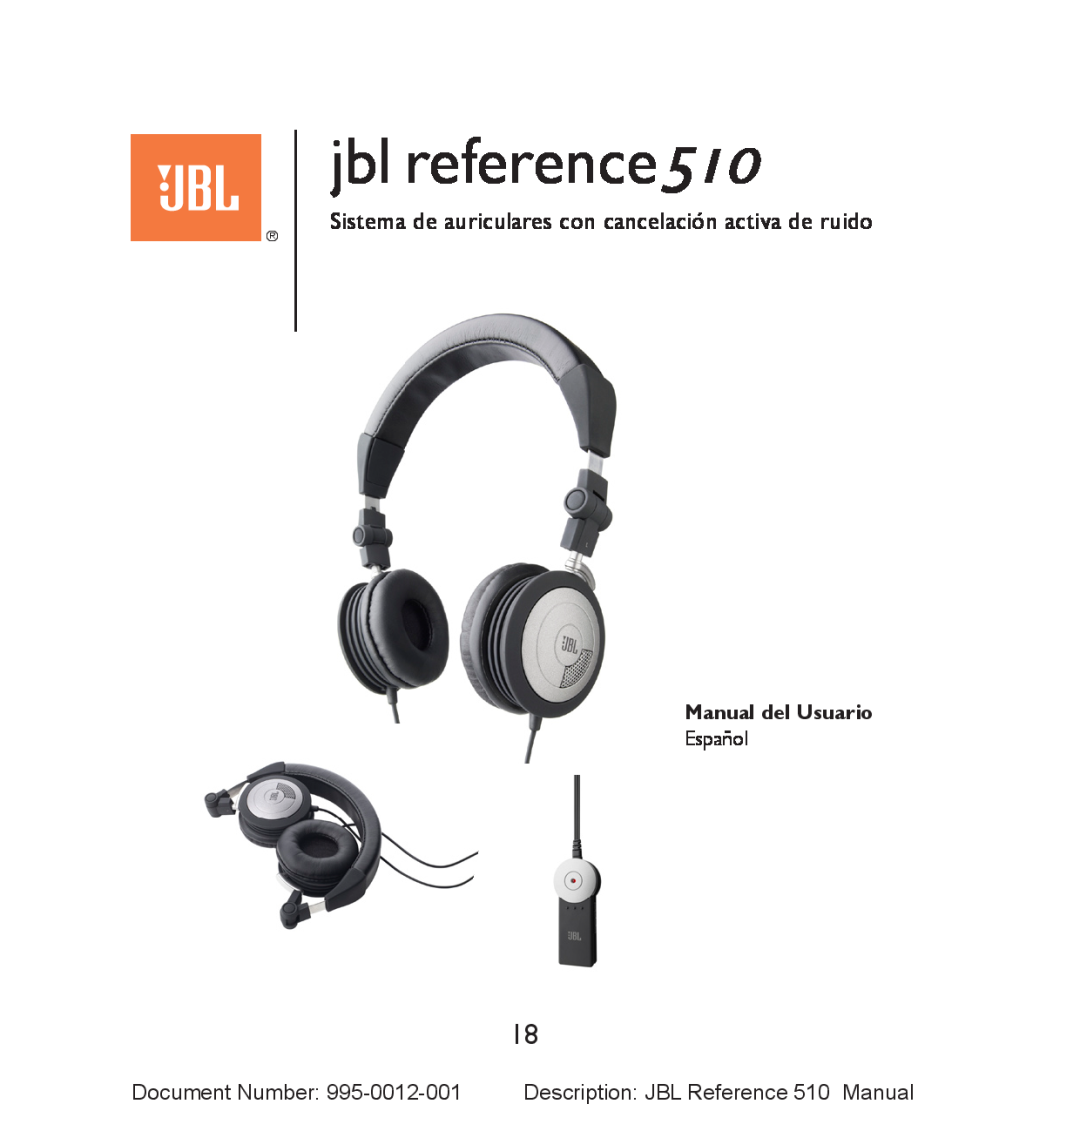 JBL manual Manual del Usuario, jbl reference510, Español 